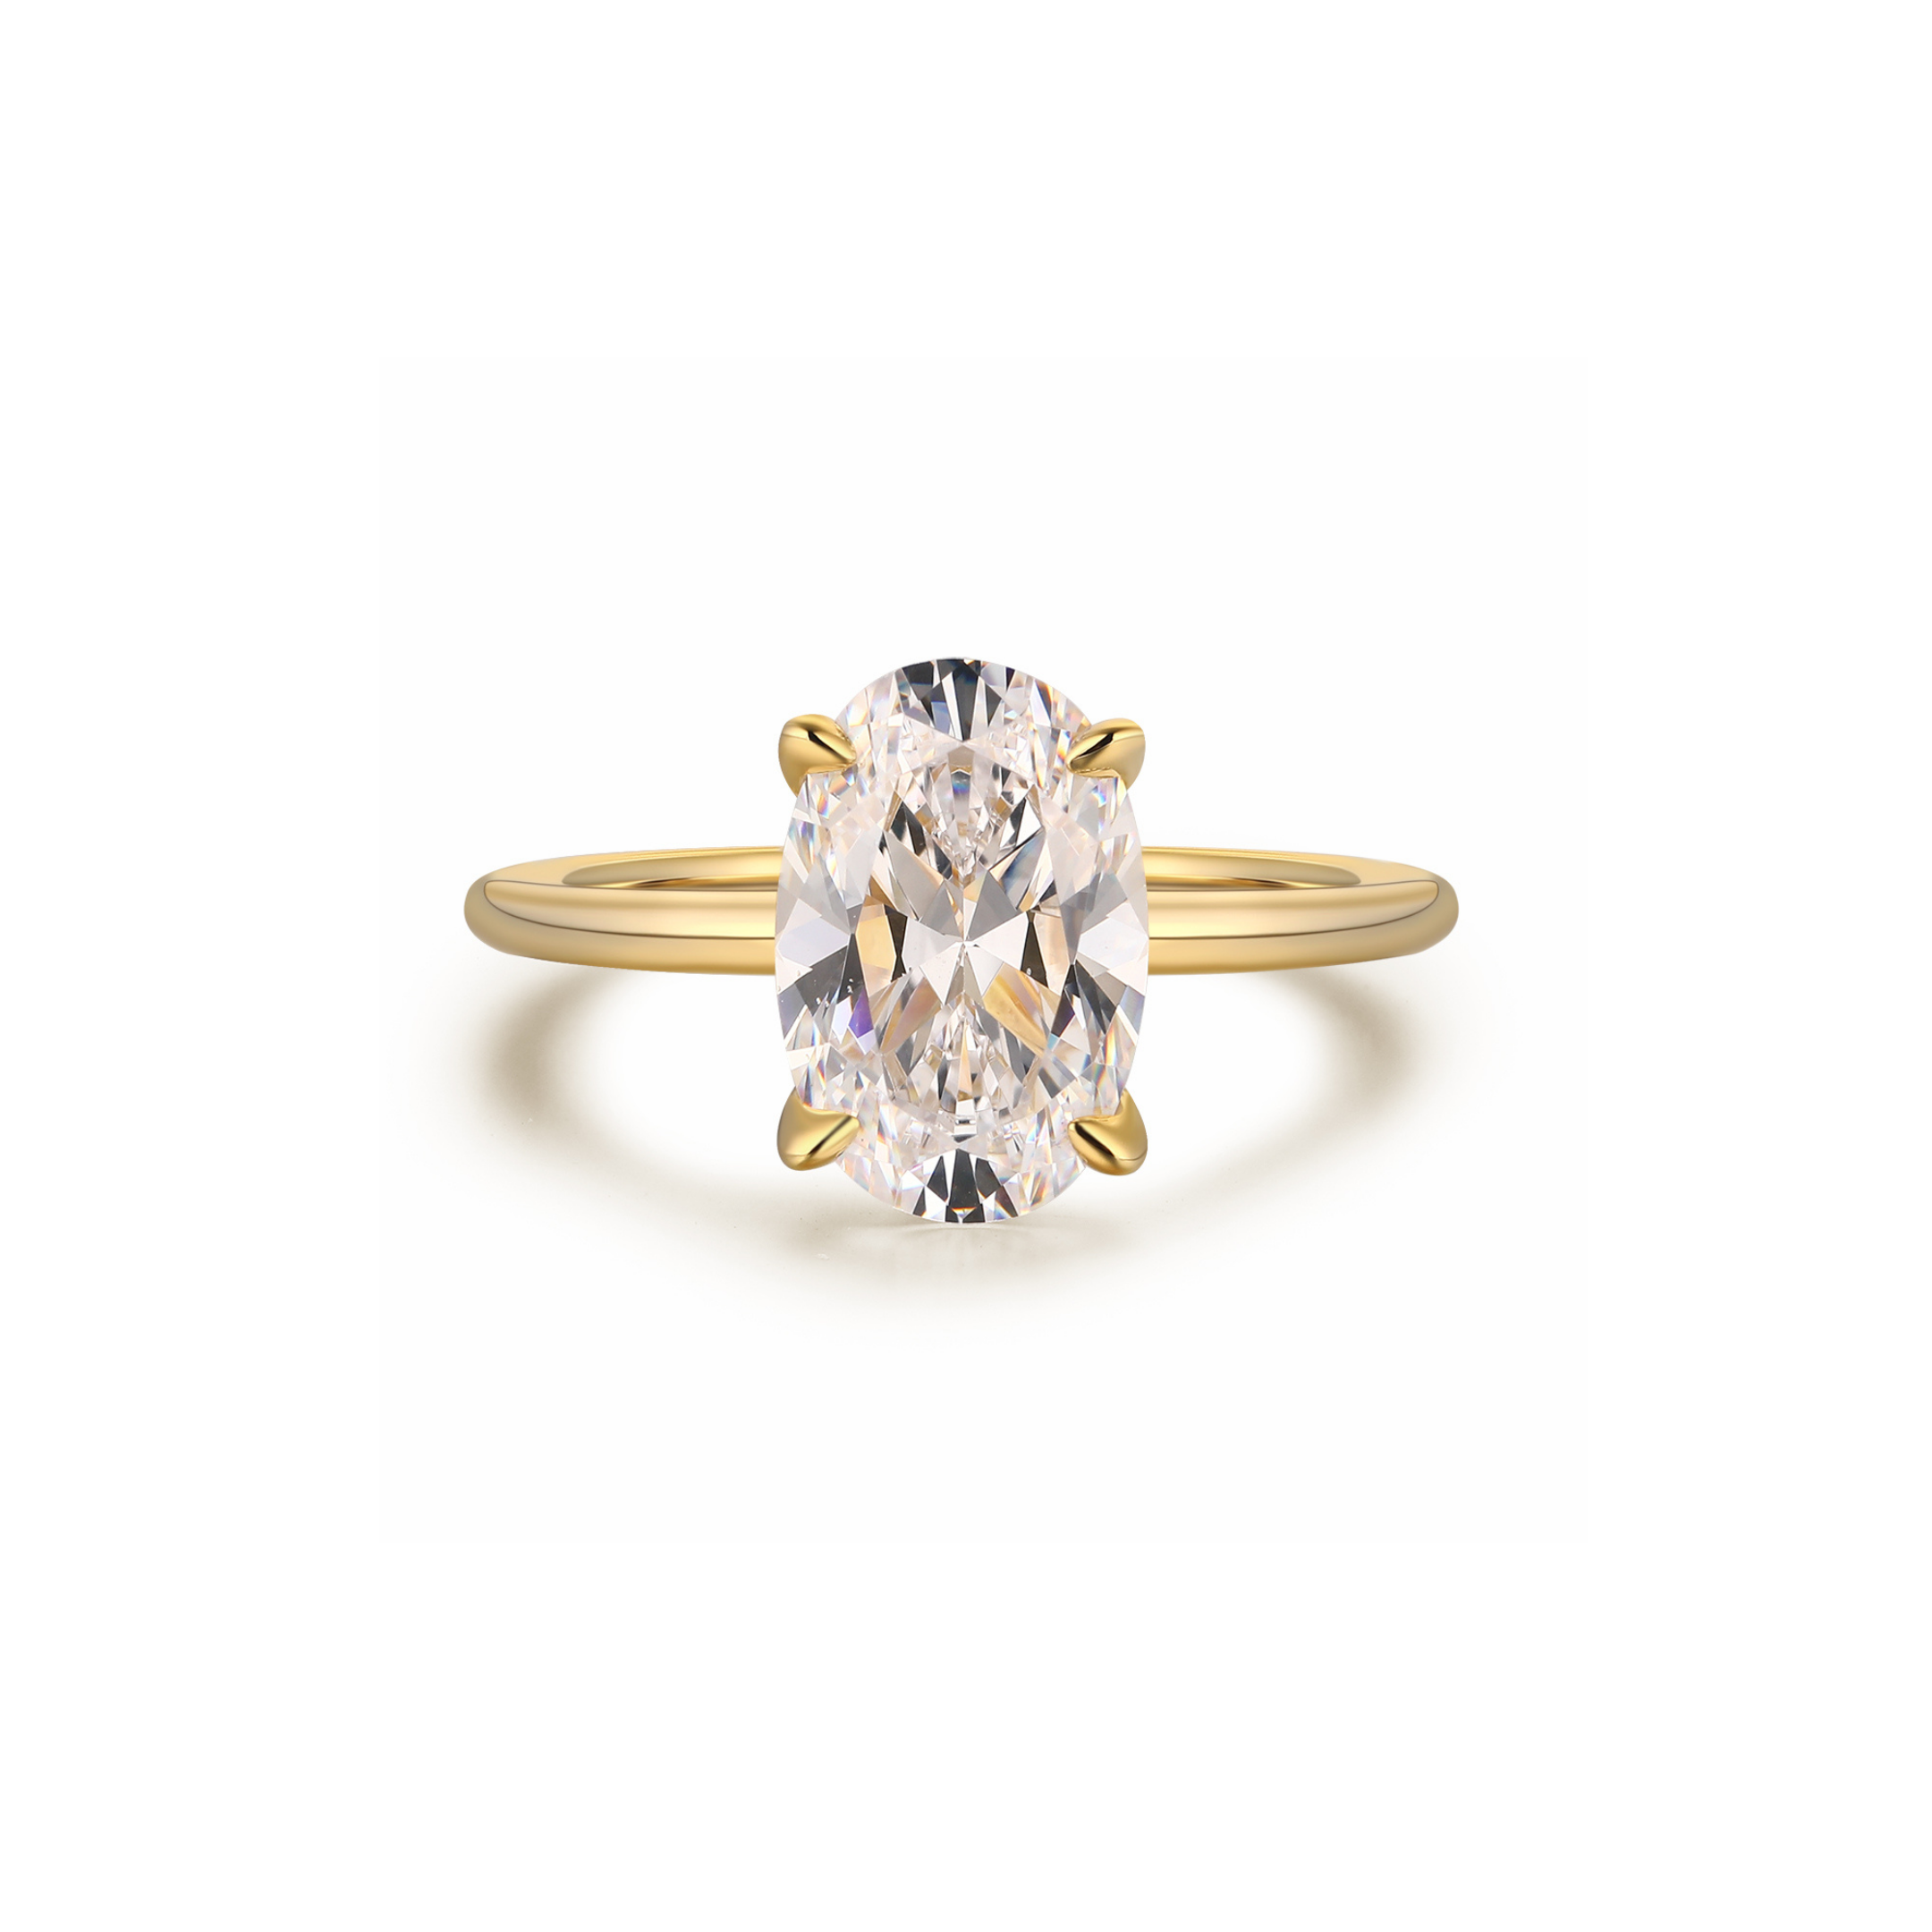 Buy White Gold Round Diamond Engagement Ring Online UK - Diamonds Factory